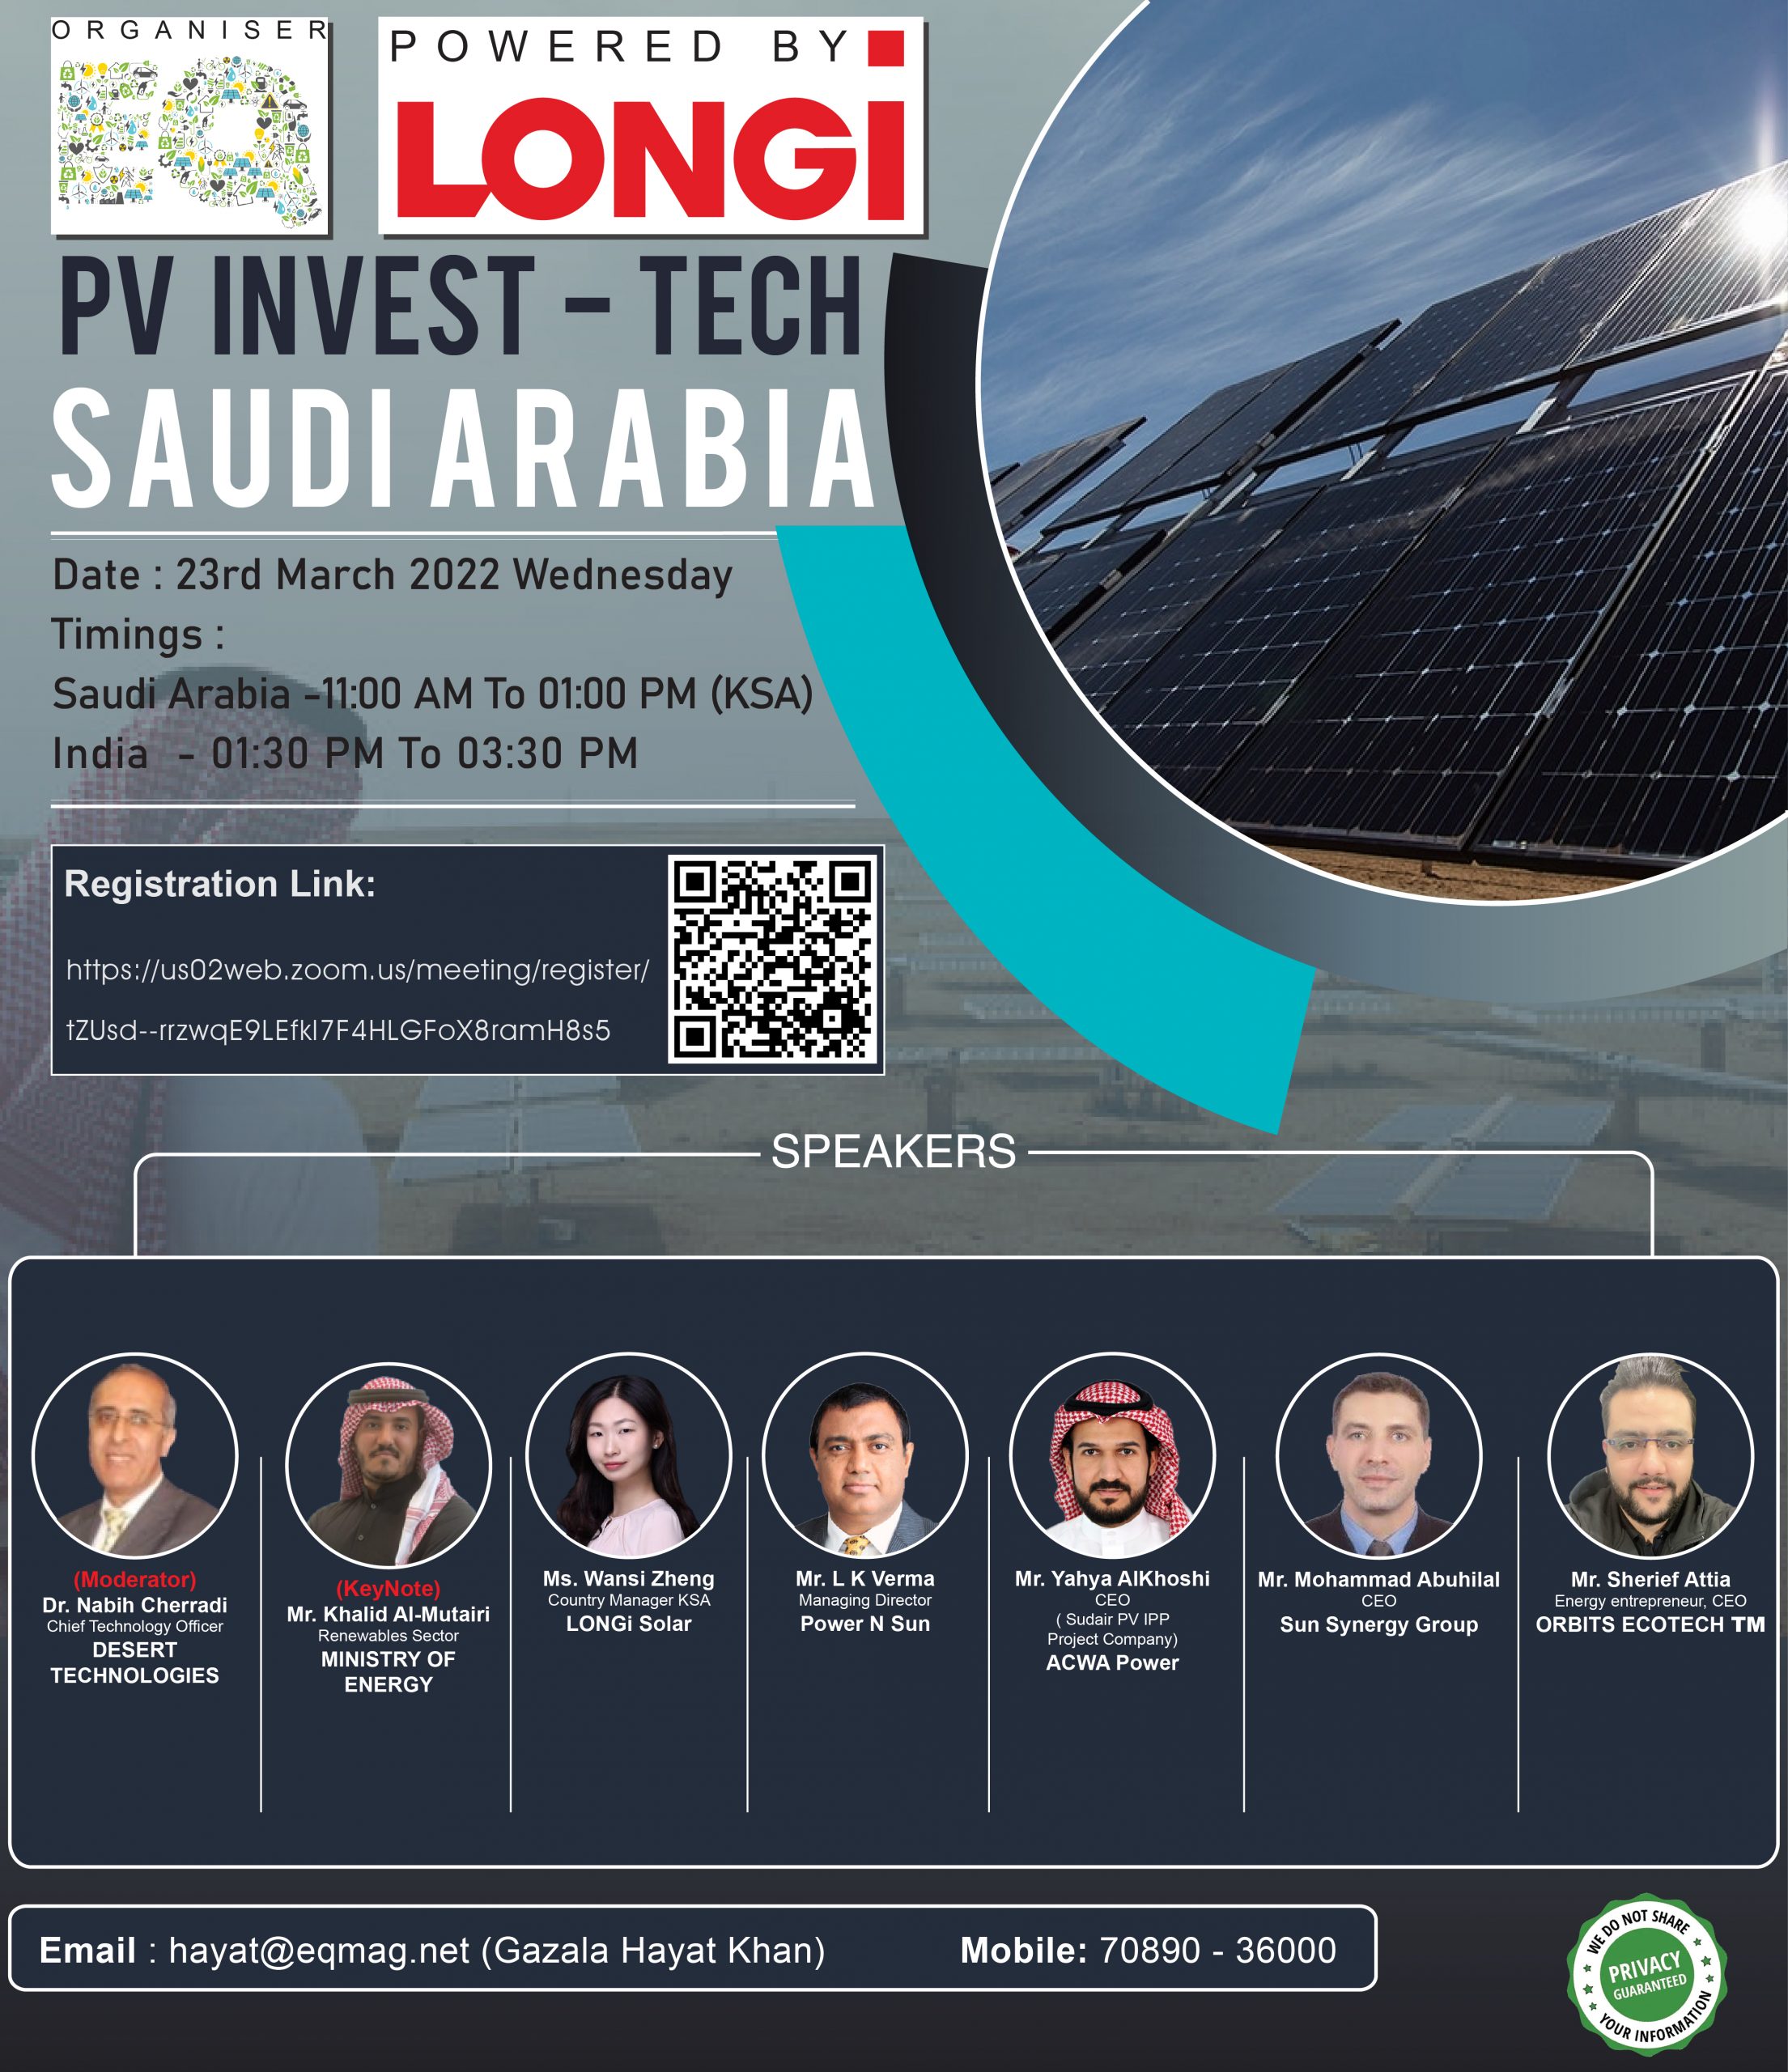 EQ Webinar on Saudi Arabia PV Invest Tech Powered by LONGi 23rd March 2022 (Wednesday) 1:30 PM Onwards….Register Now!